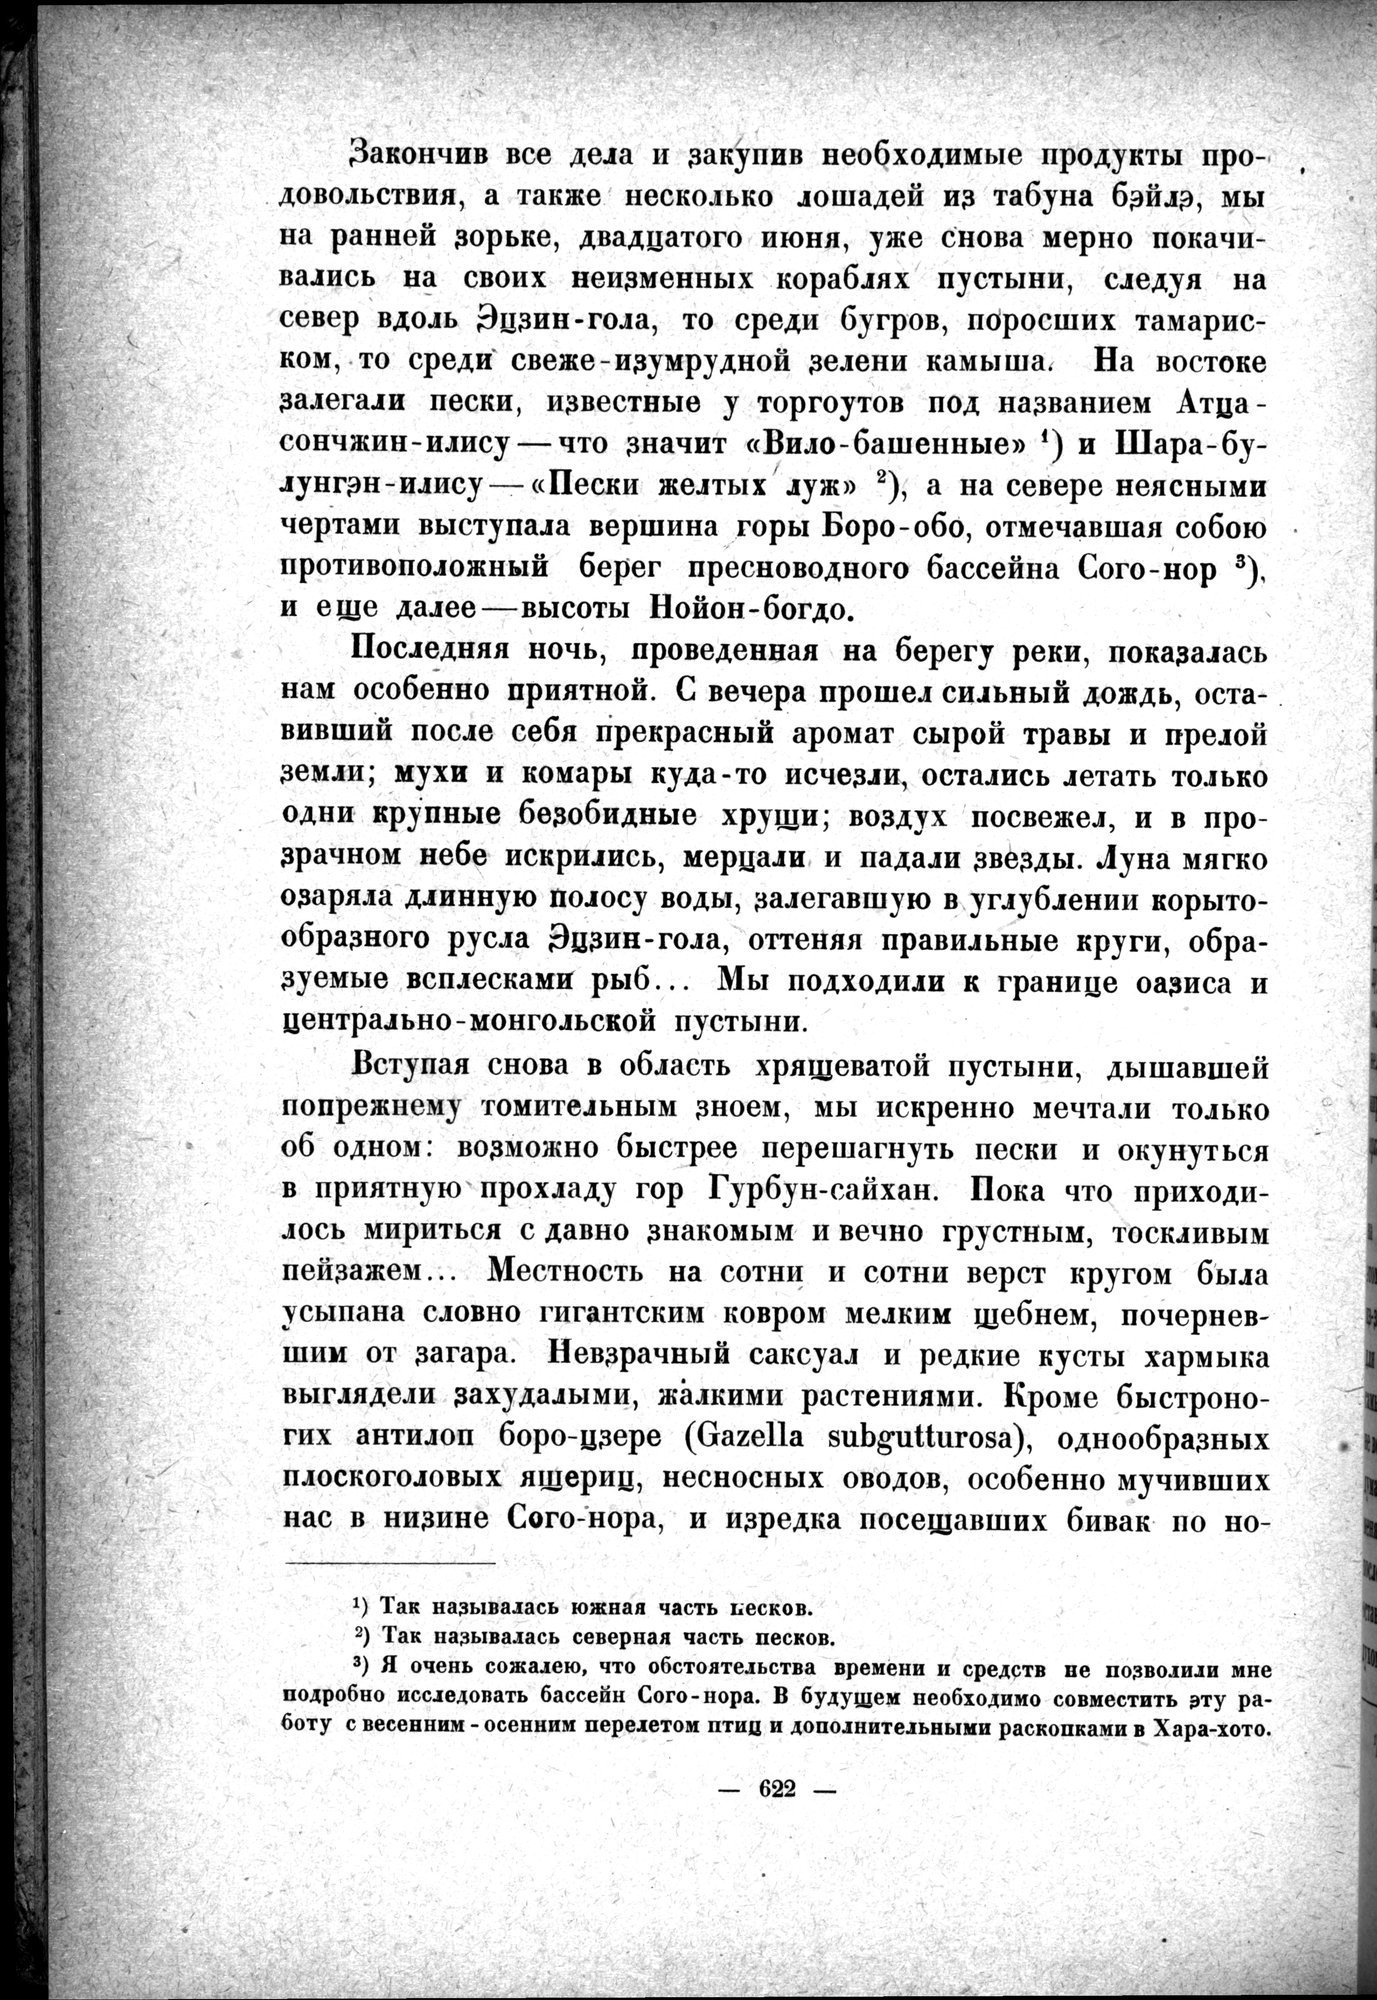 Mongoliya i Amdo i mertby gorod Khara-Khoto : vol.1 / Page 712 (Grayscale High Resolution Image)